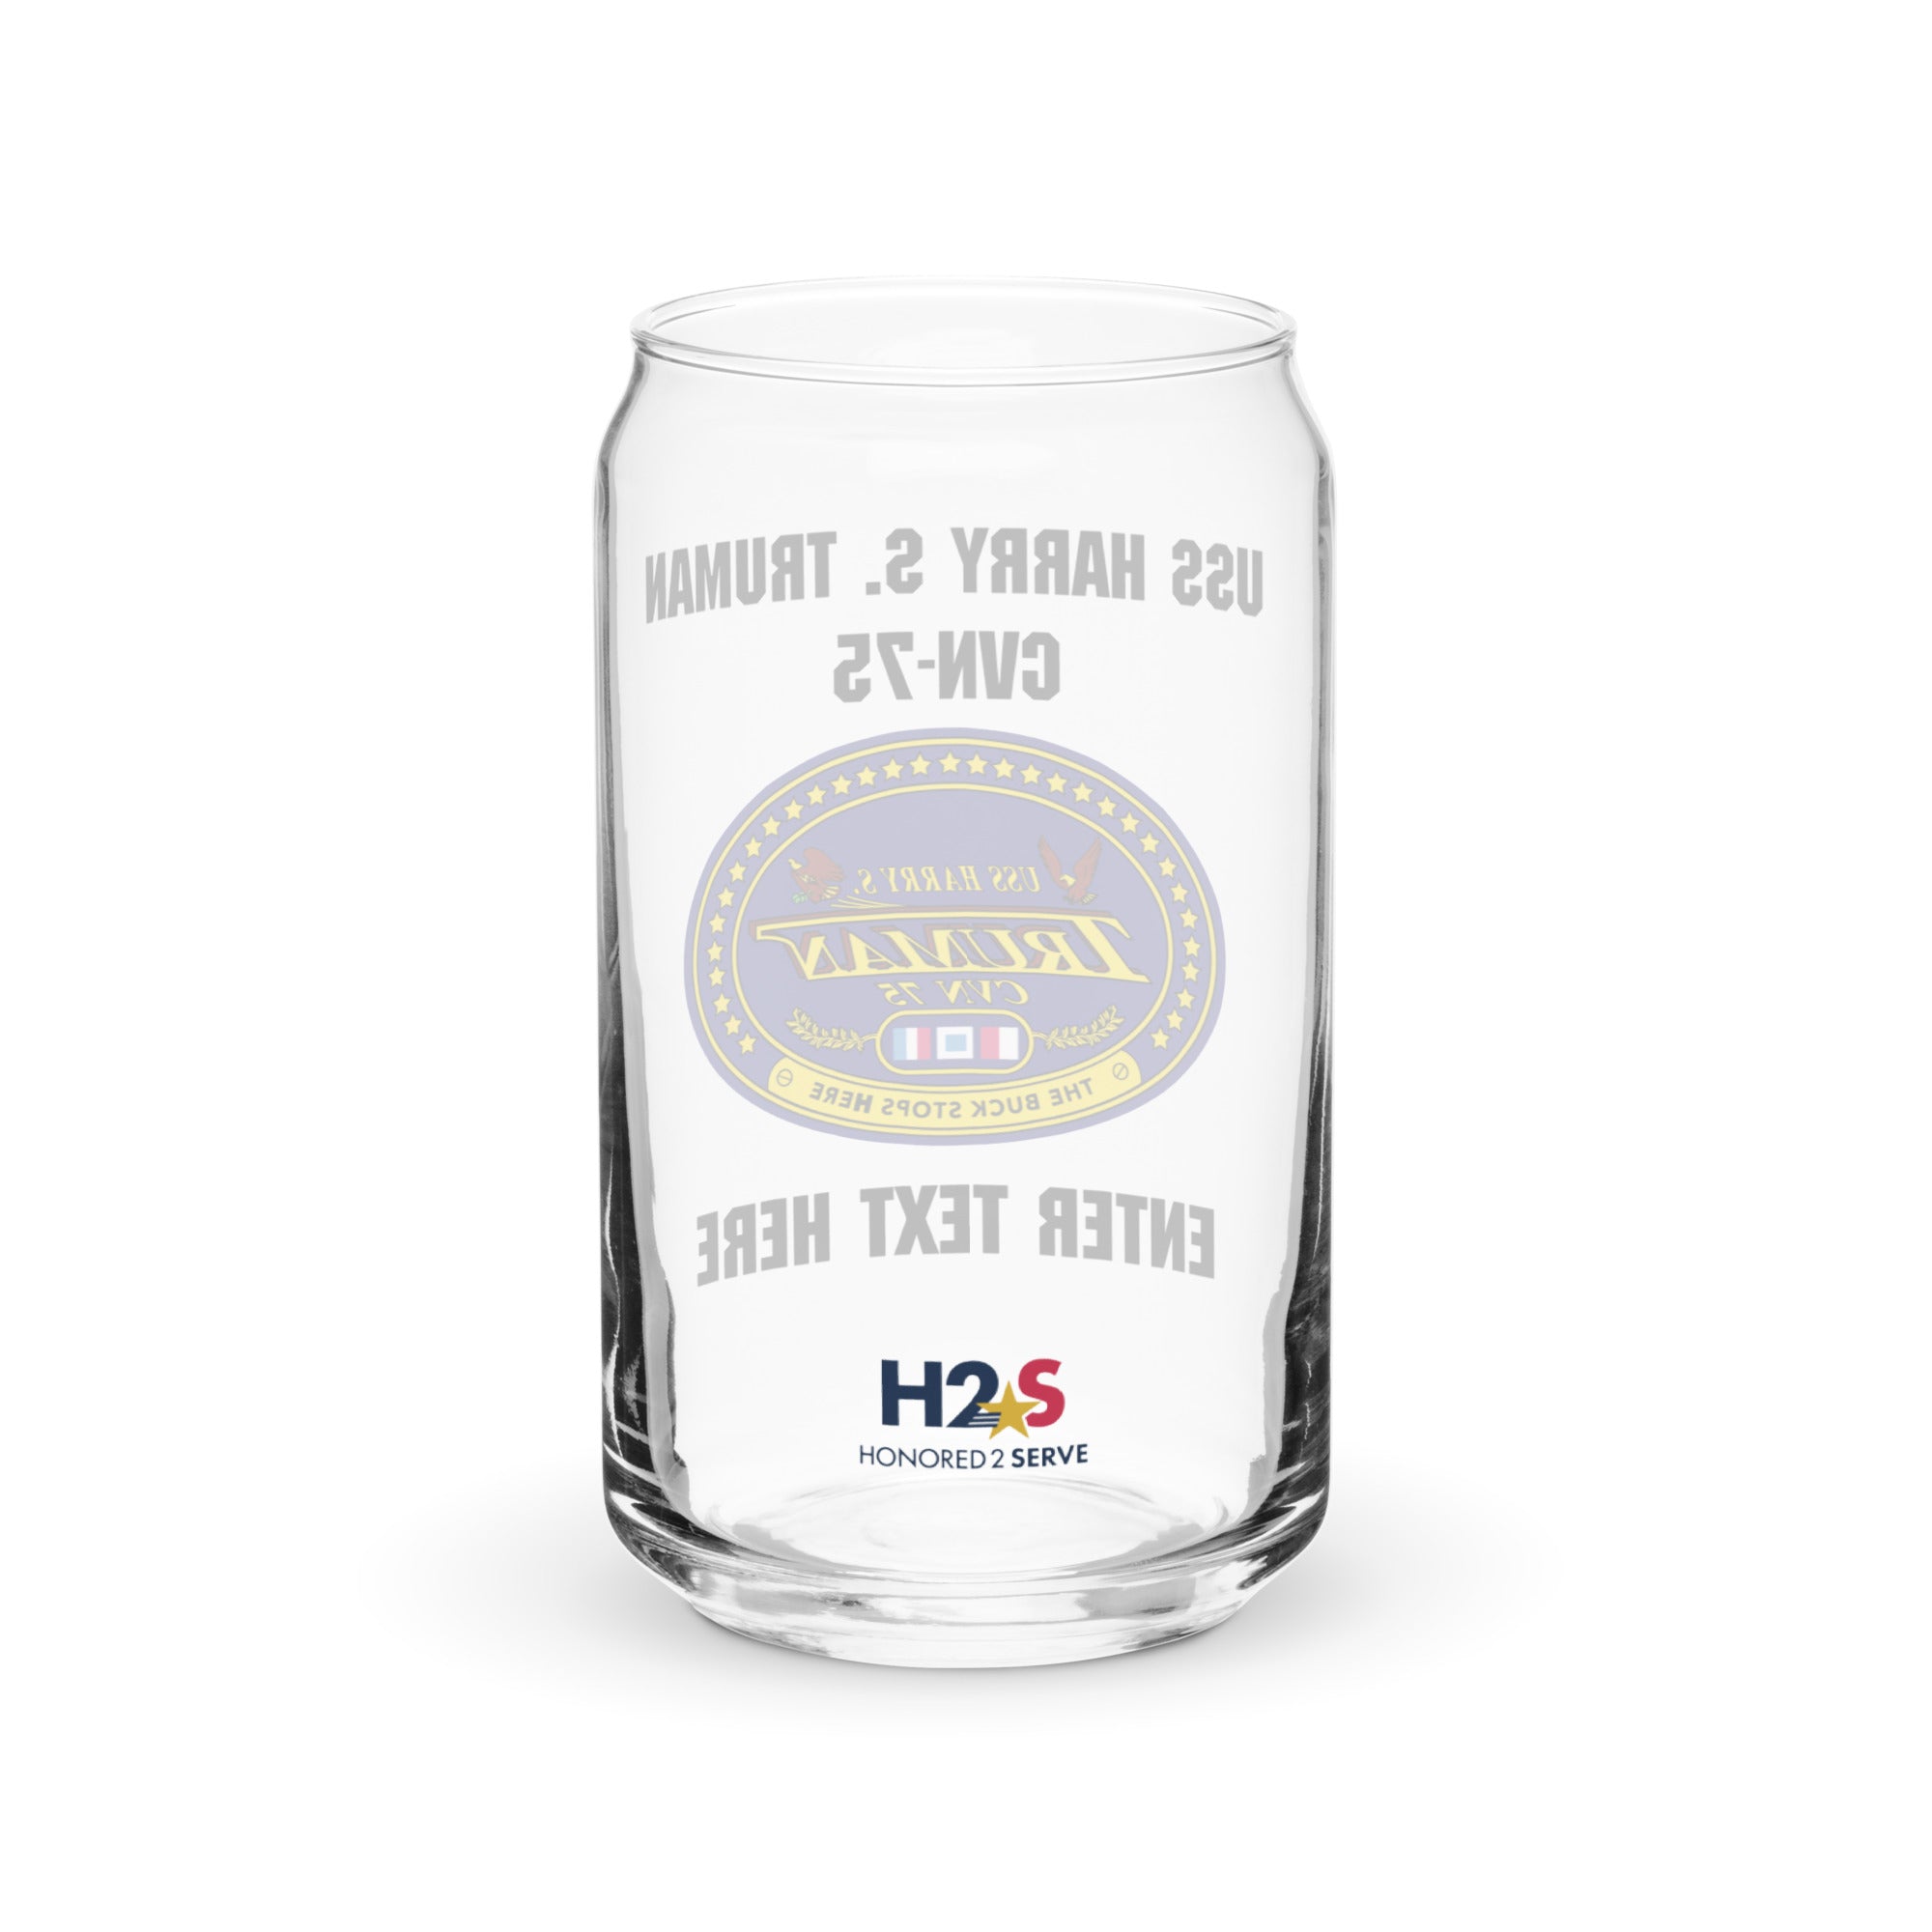 Customizable USS HARRY S. TRUMAN Can-shaped glass